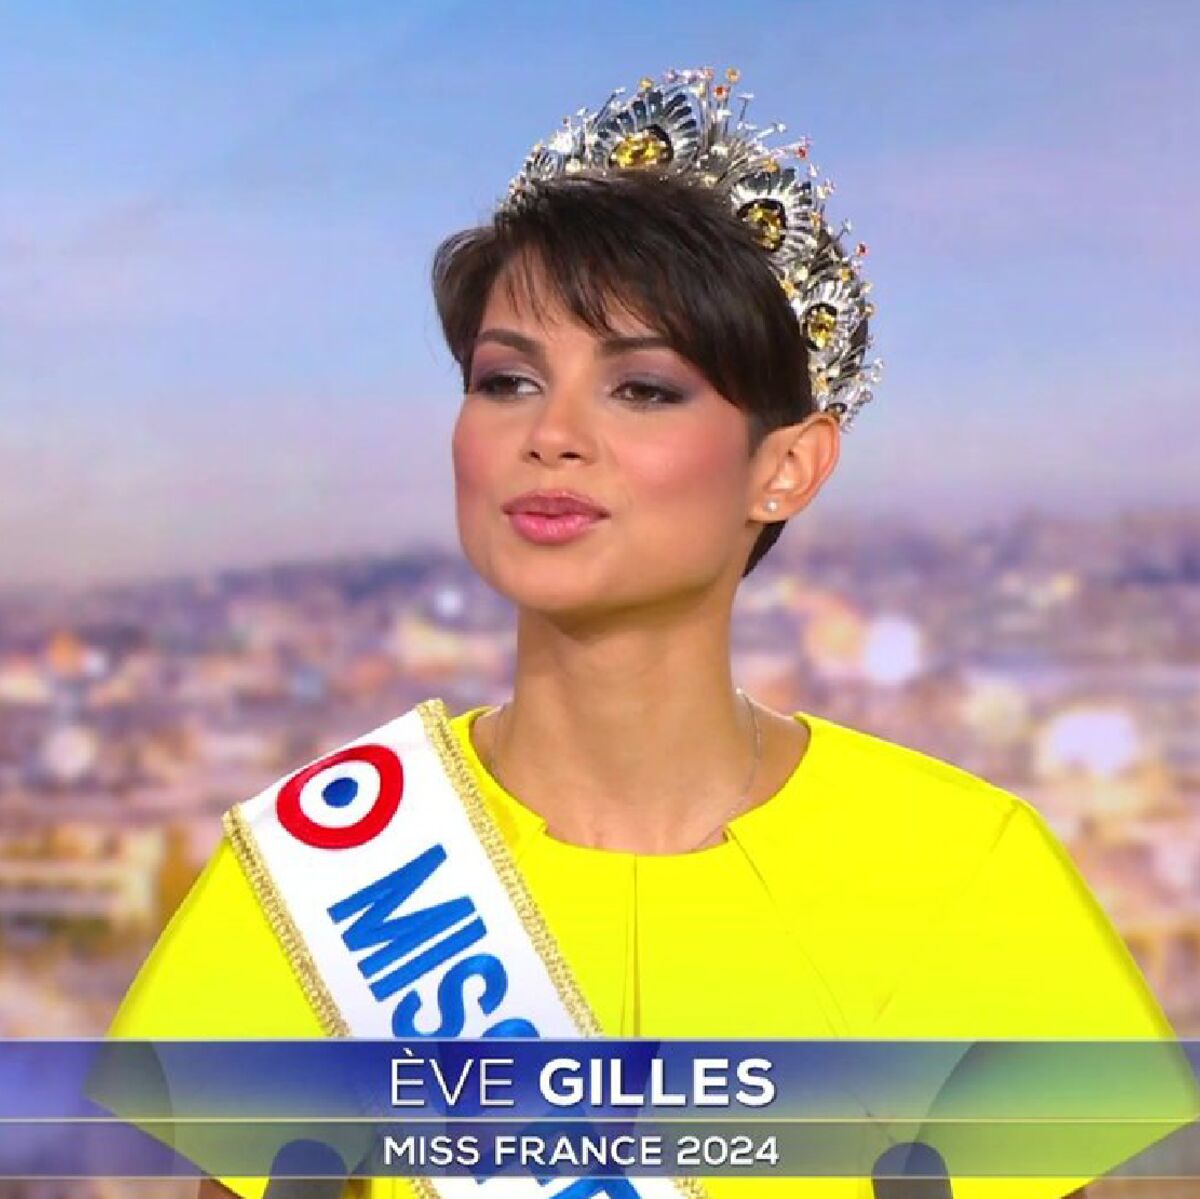 Eve Gilles - Miss France 2024 - La biographie de Eve Gilles - Miss